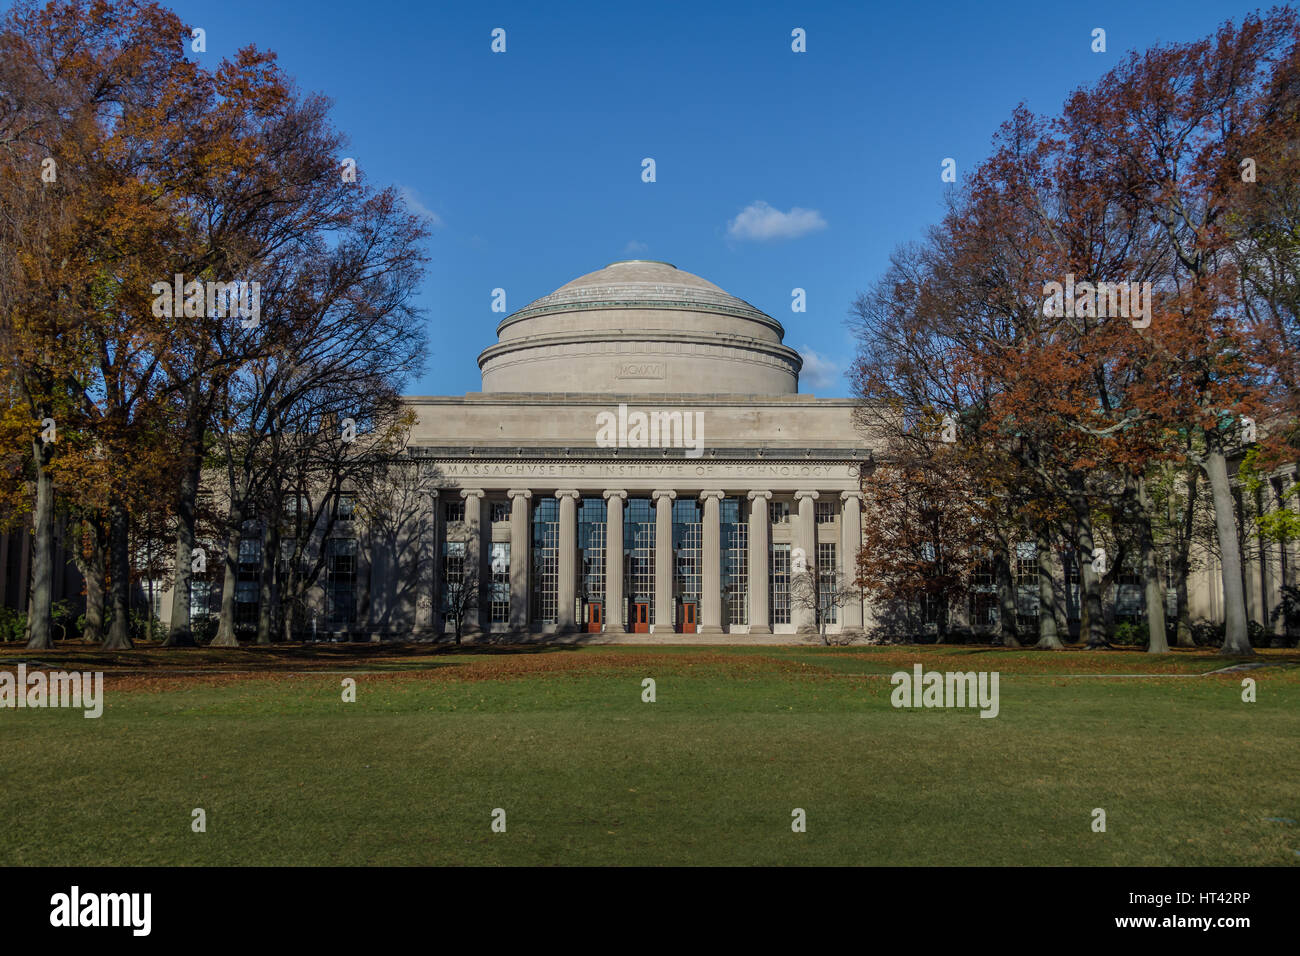 Massachusetts Institute of Technology (MIT) Dome - Cambridge, Massachusetts, USA Stock Photo